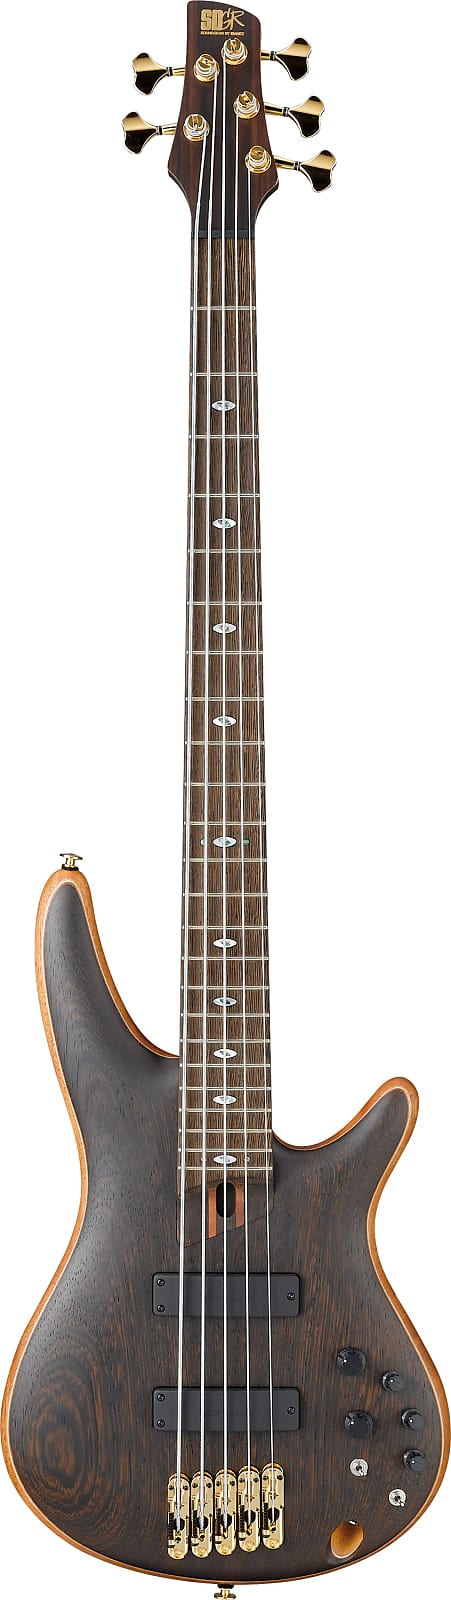 Ibanez SR5005-OL SR-Series Prestige Made in Japan E-Bass 5 String Oil on  OhGuitar.com